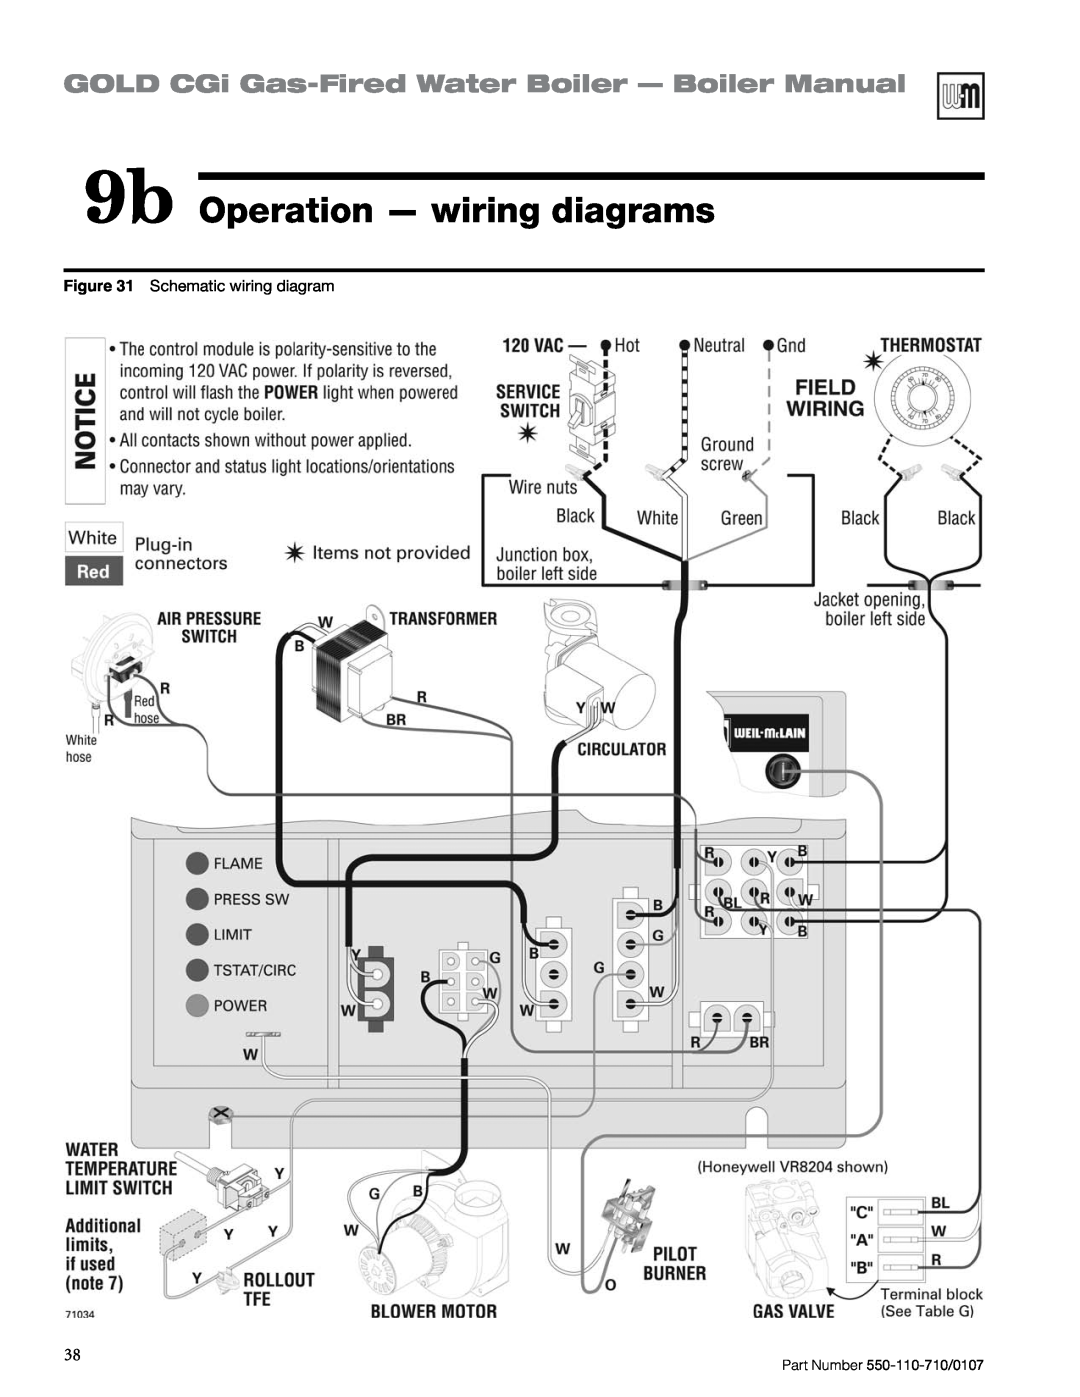 Weil-McLain 550-110-710/0107 manual 9b Operation — wiring diagrams, GOLD CGi Gas-FiredWater Boiler — Boiler Manual 